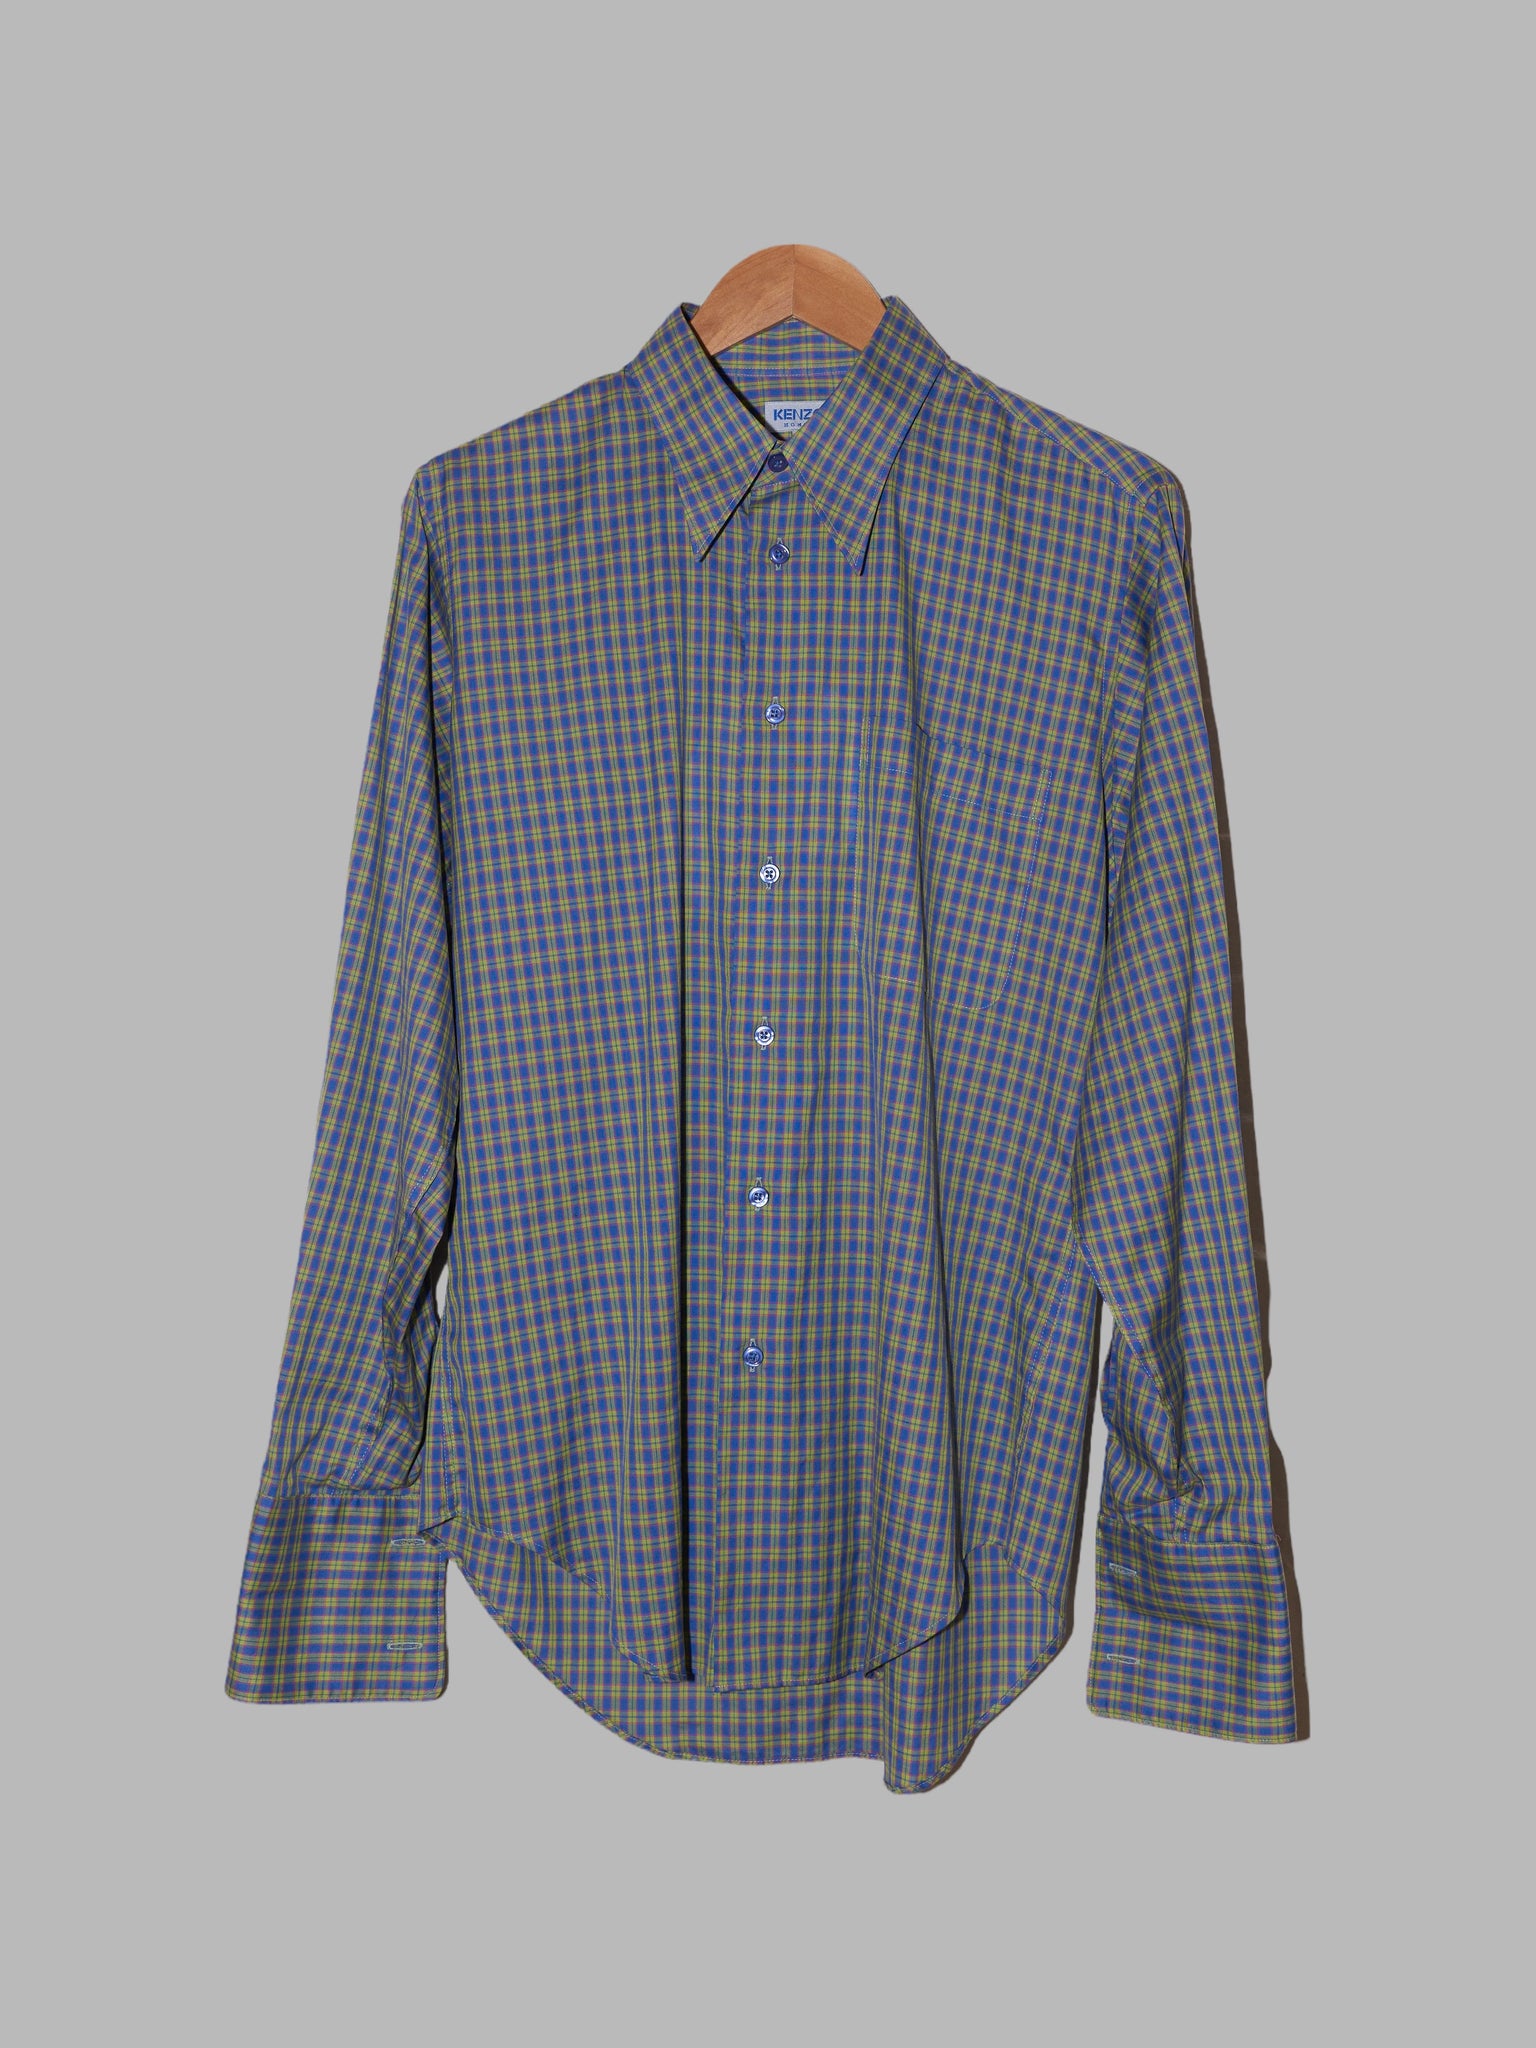 Kenzo Homme 1990s blue green cotton check shirt - size 3 L M